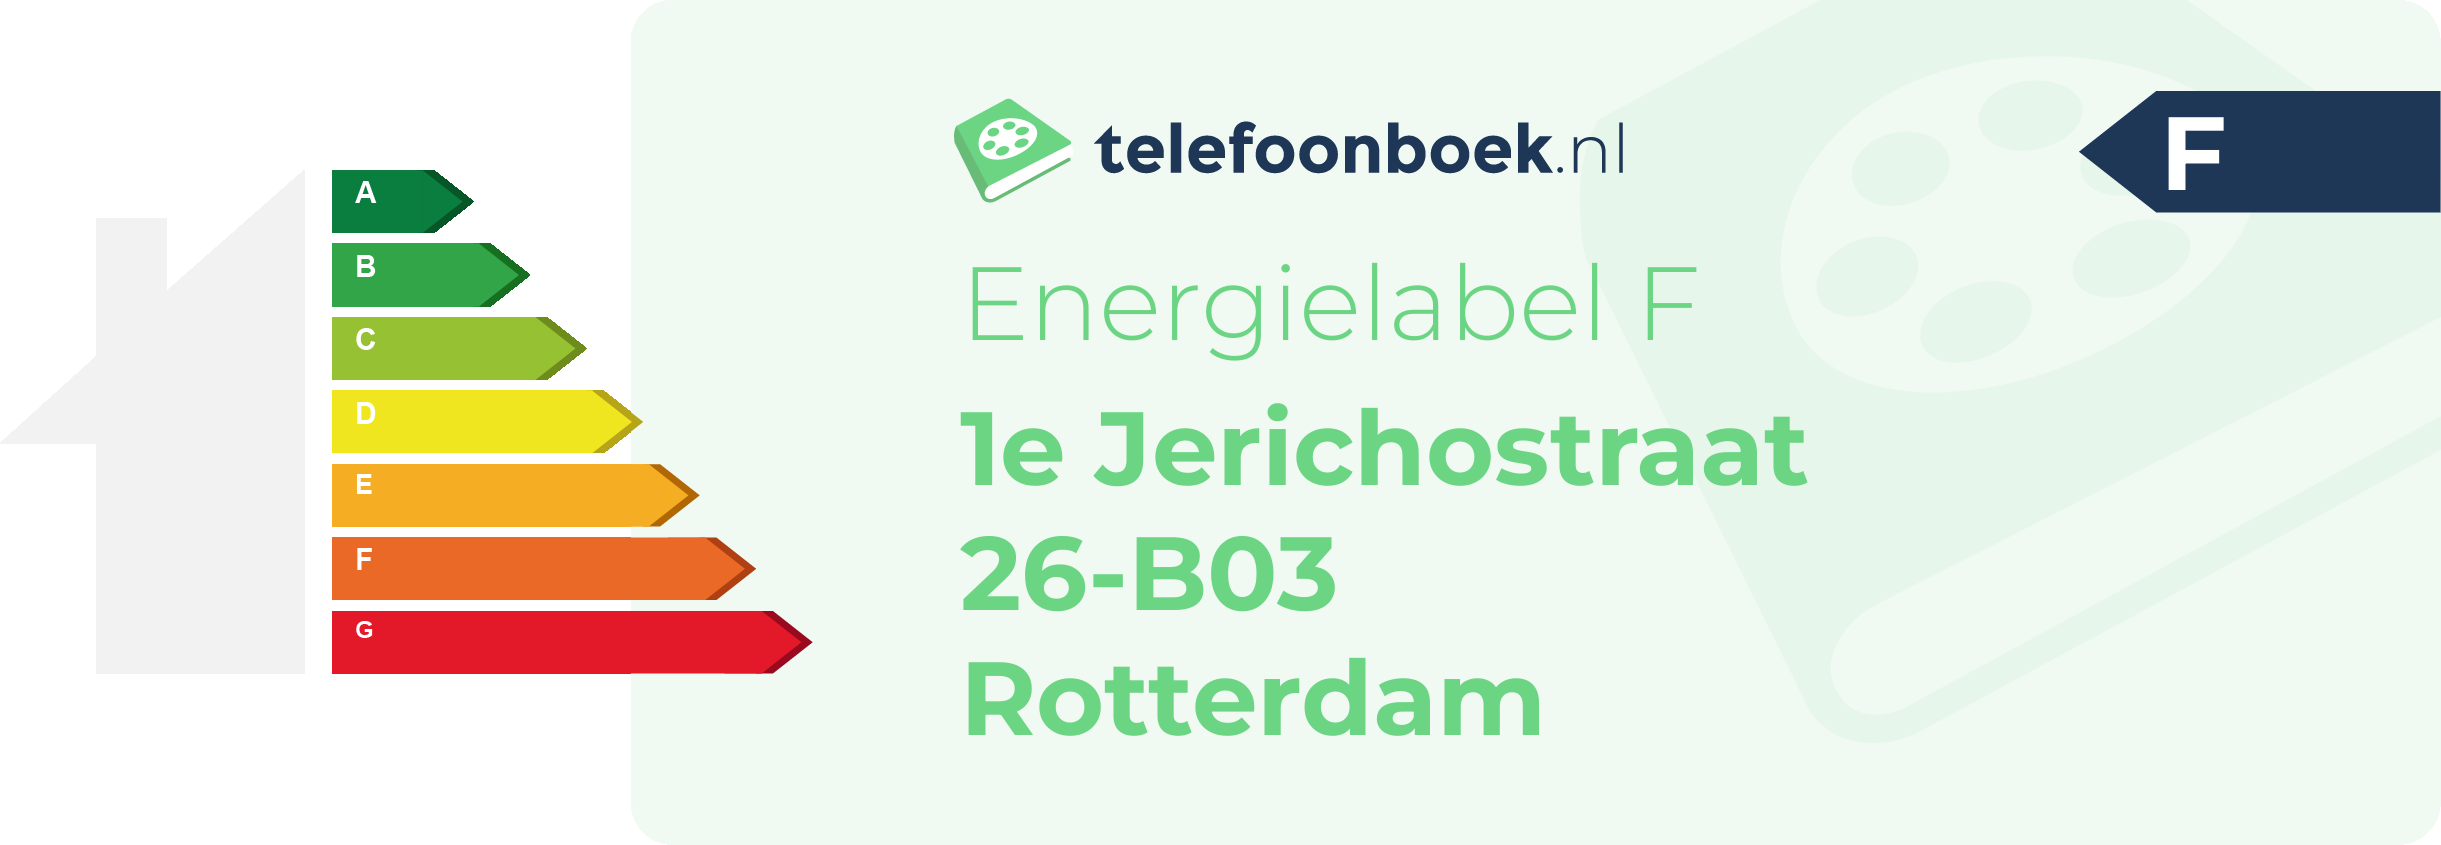 Energielabel 1e Jerichostraat 26-B03 Rotterdam